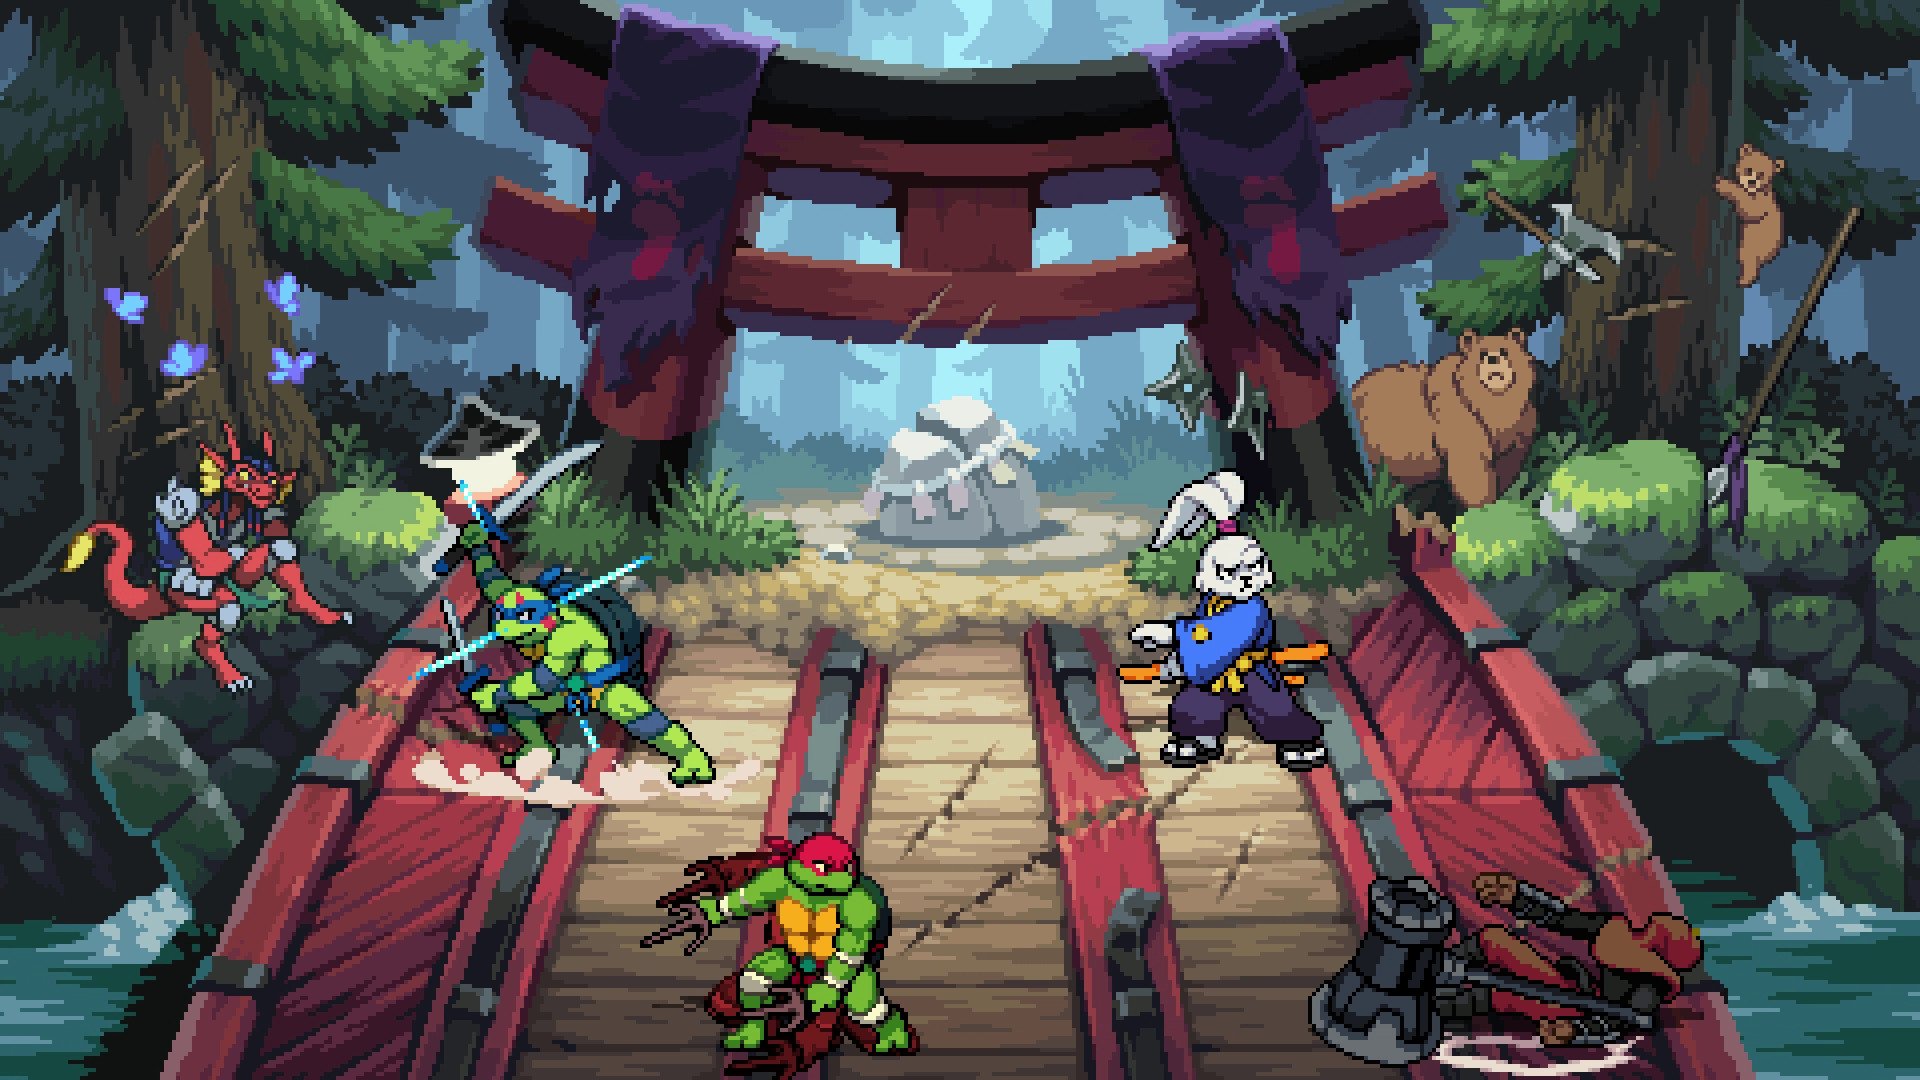 Teenage Mutant Ninja Turtles Mobile Game Announced